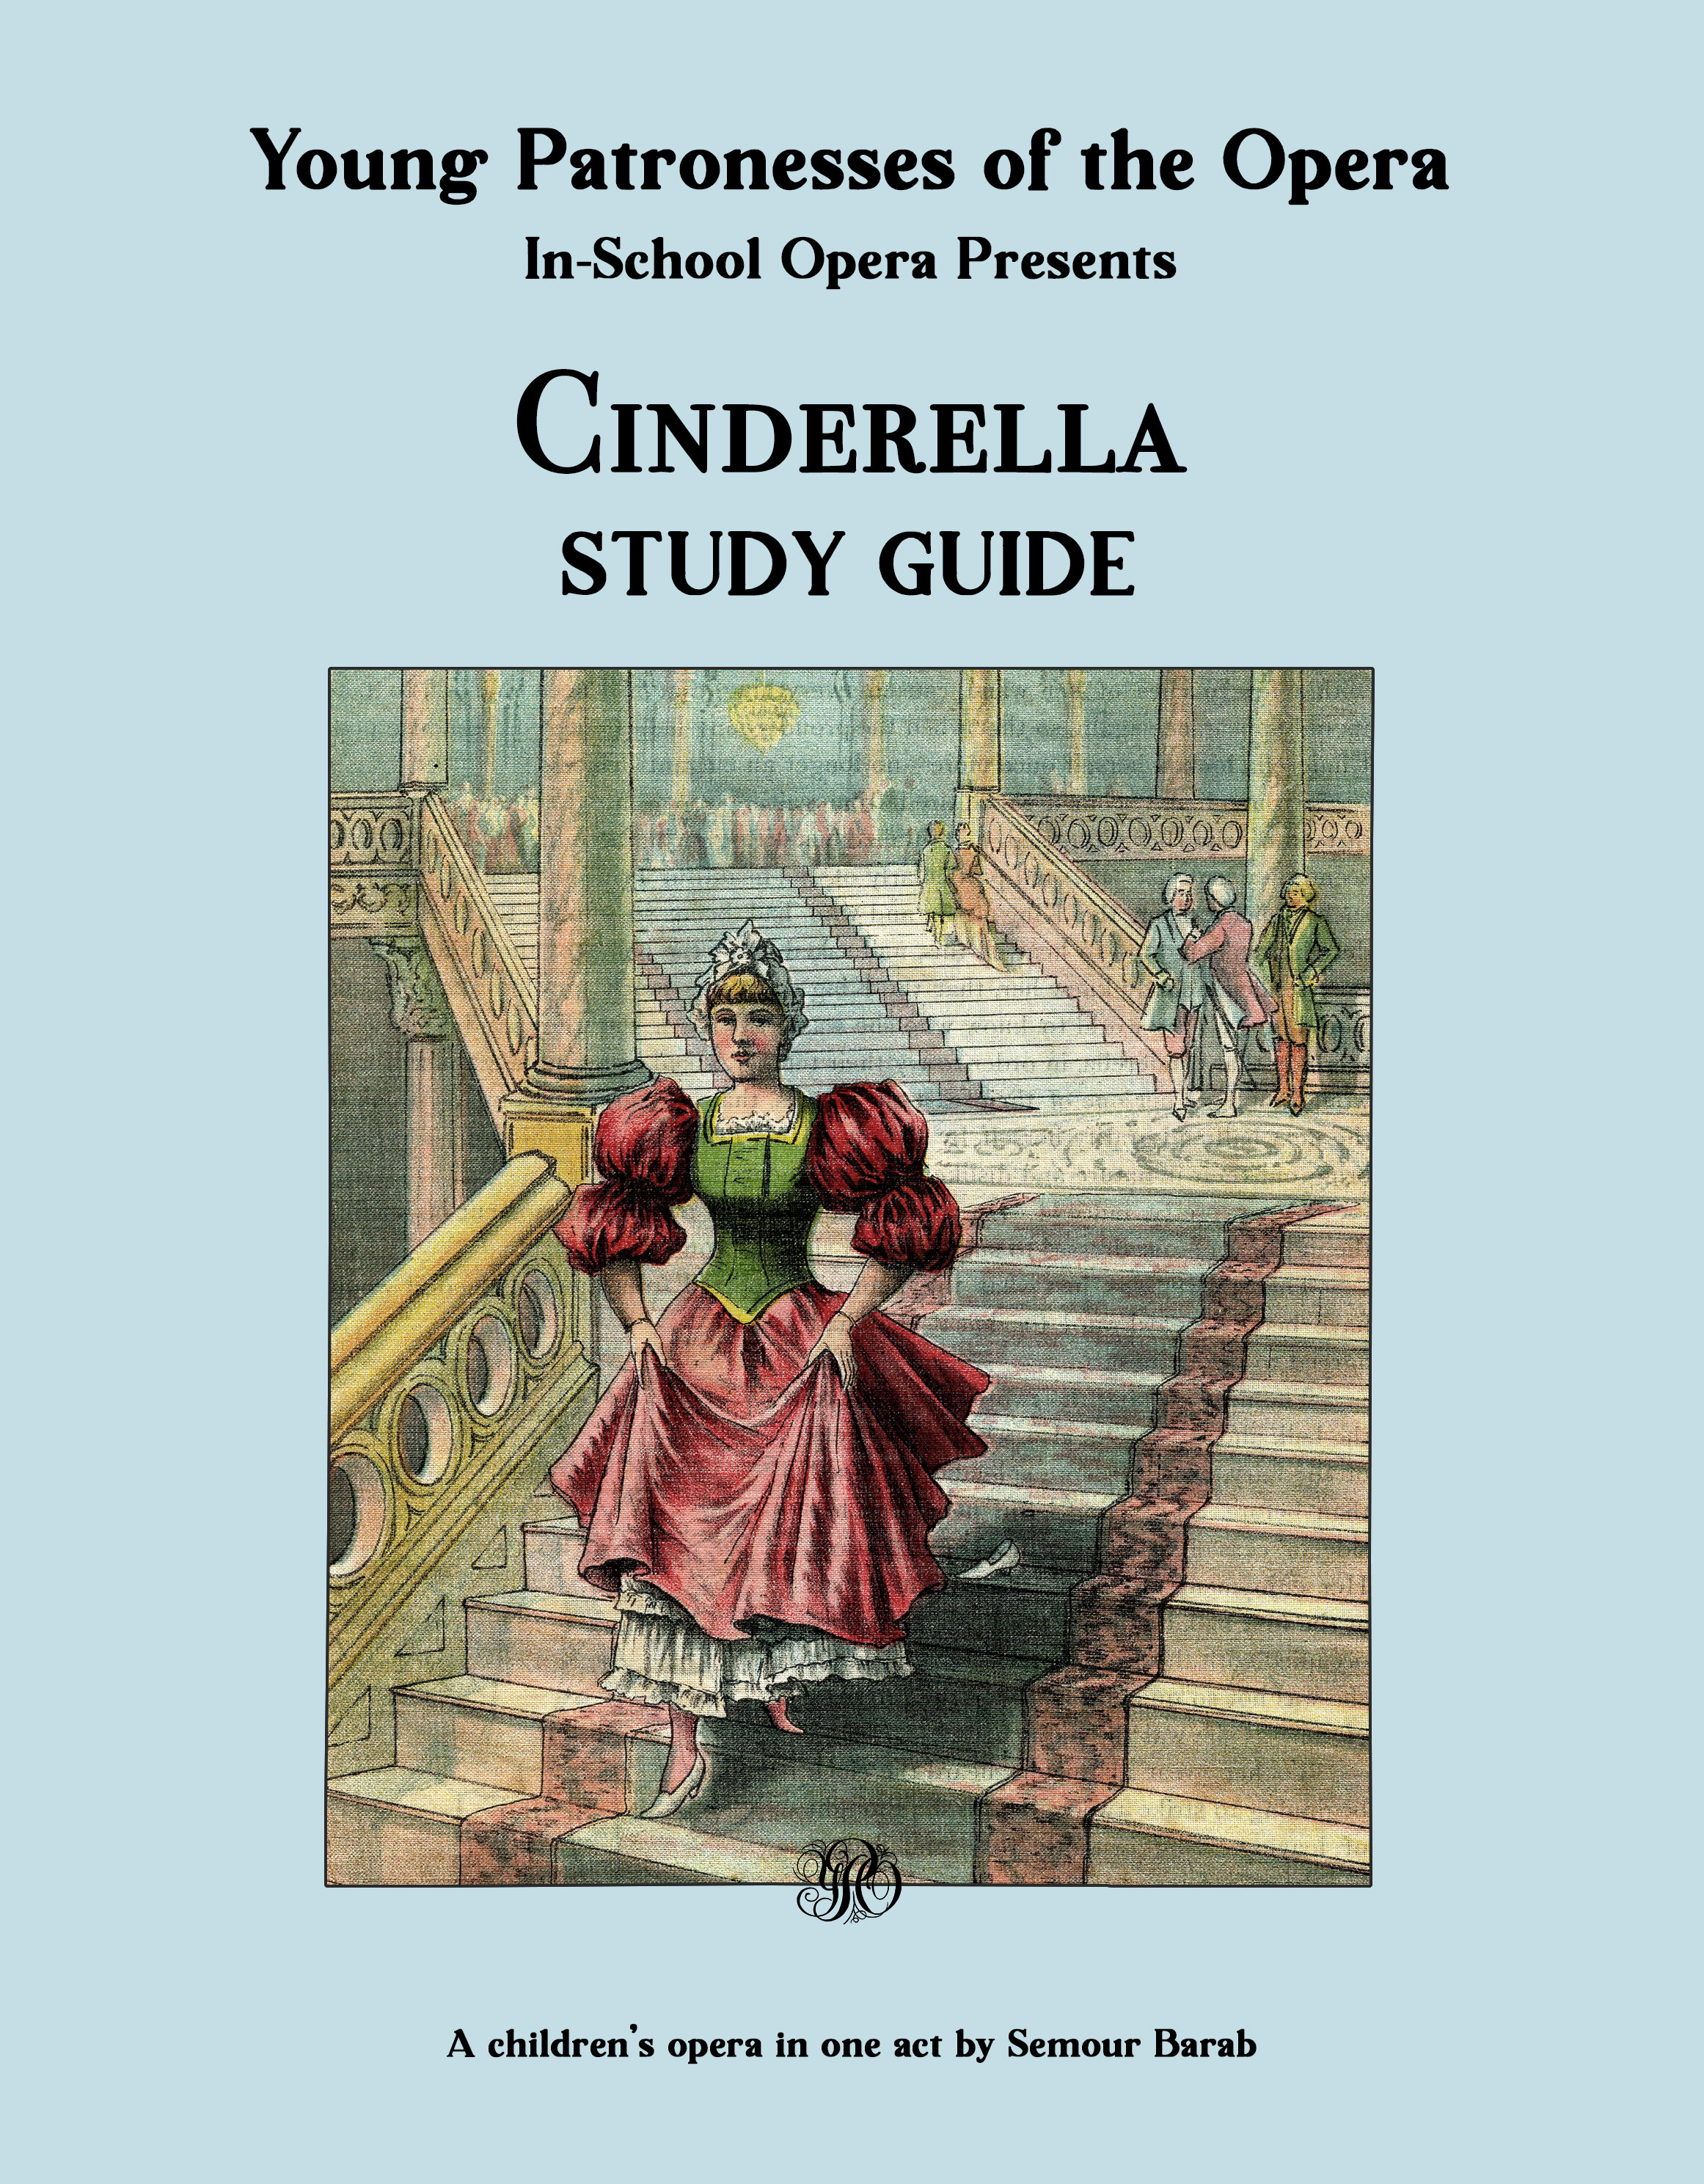 Cinderella Study Guide front.jpg